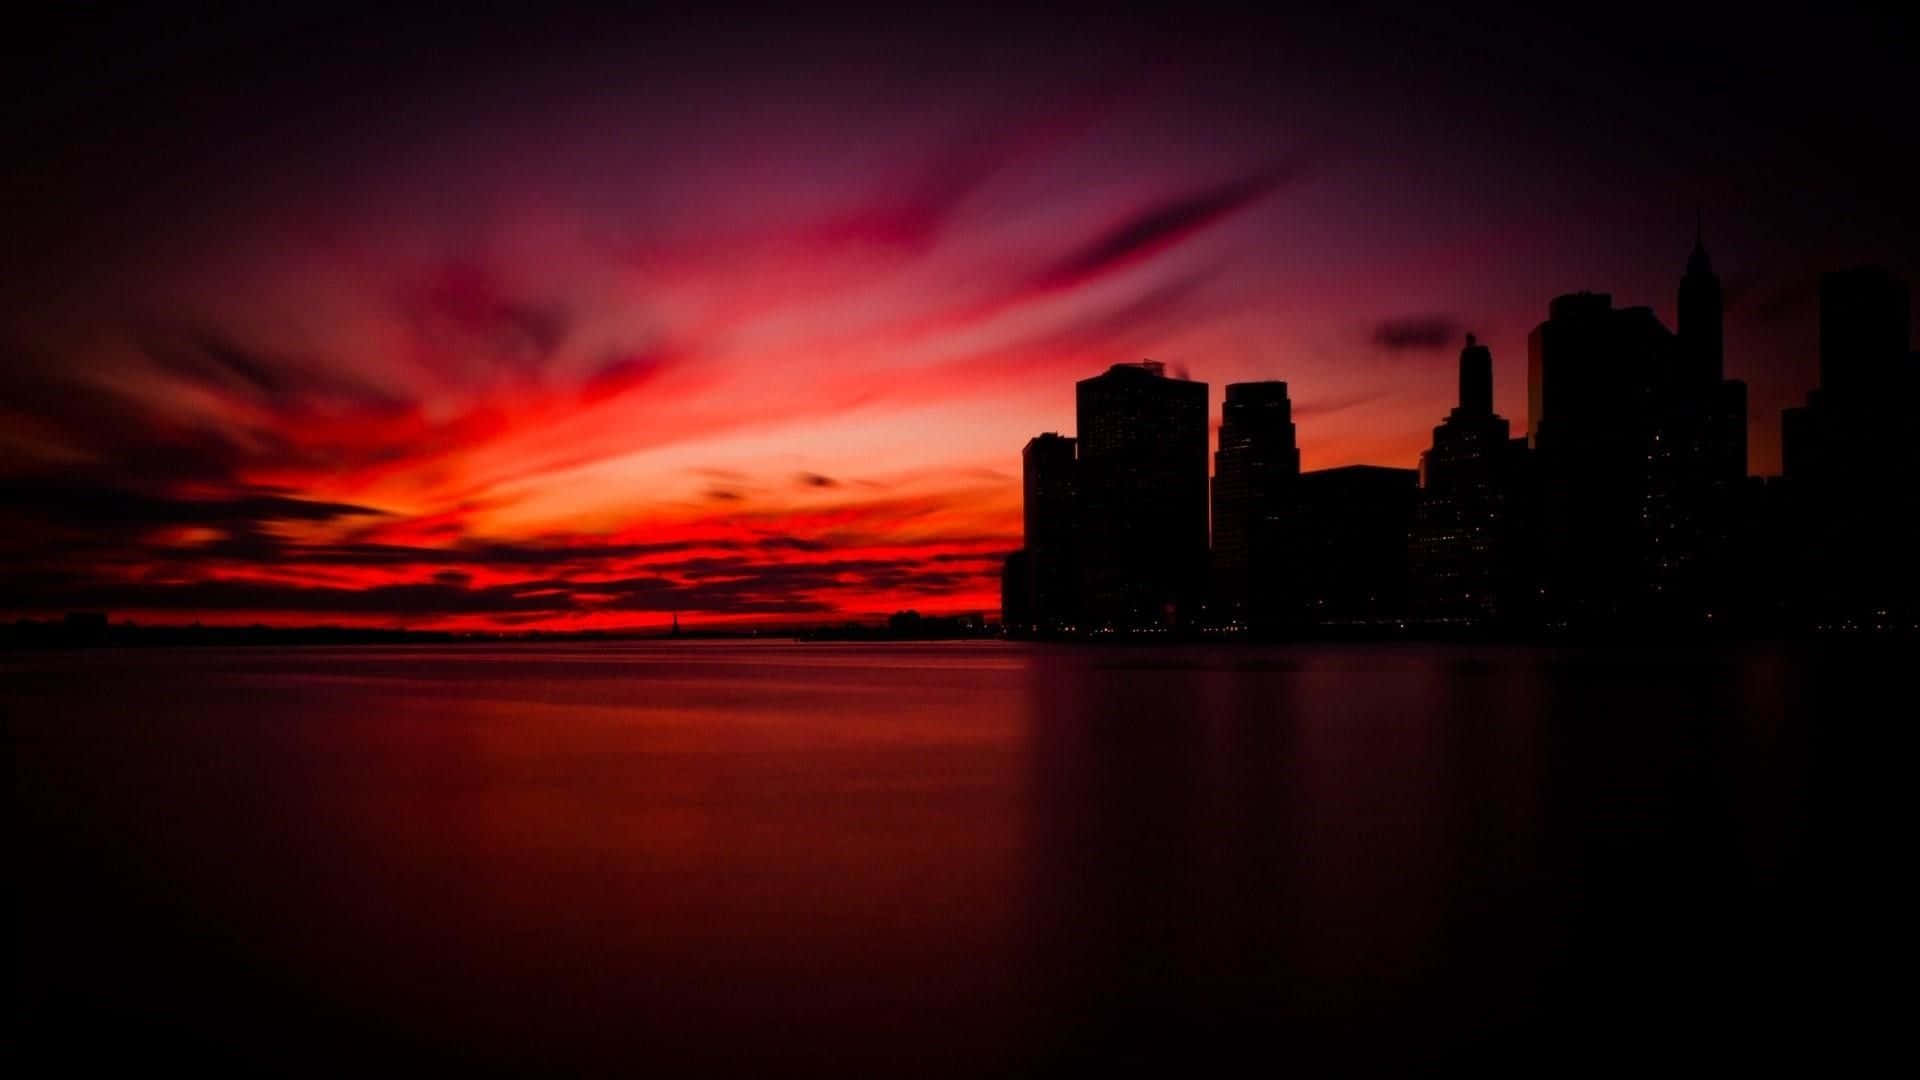 Stunning Red Sunset Over the Horizon Wallpaper